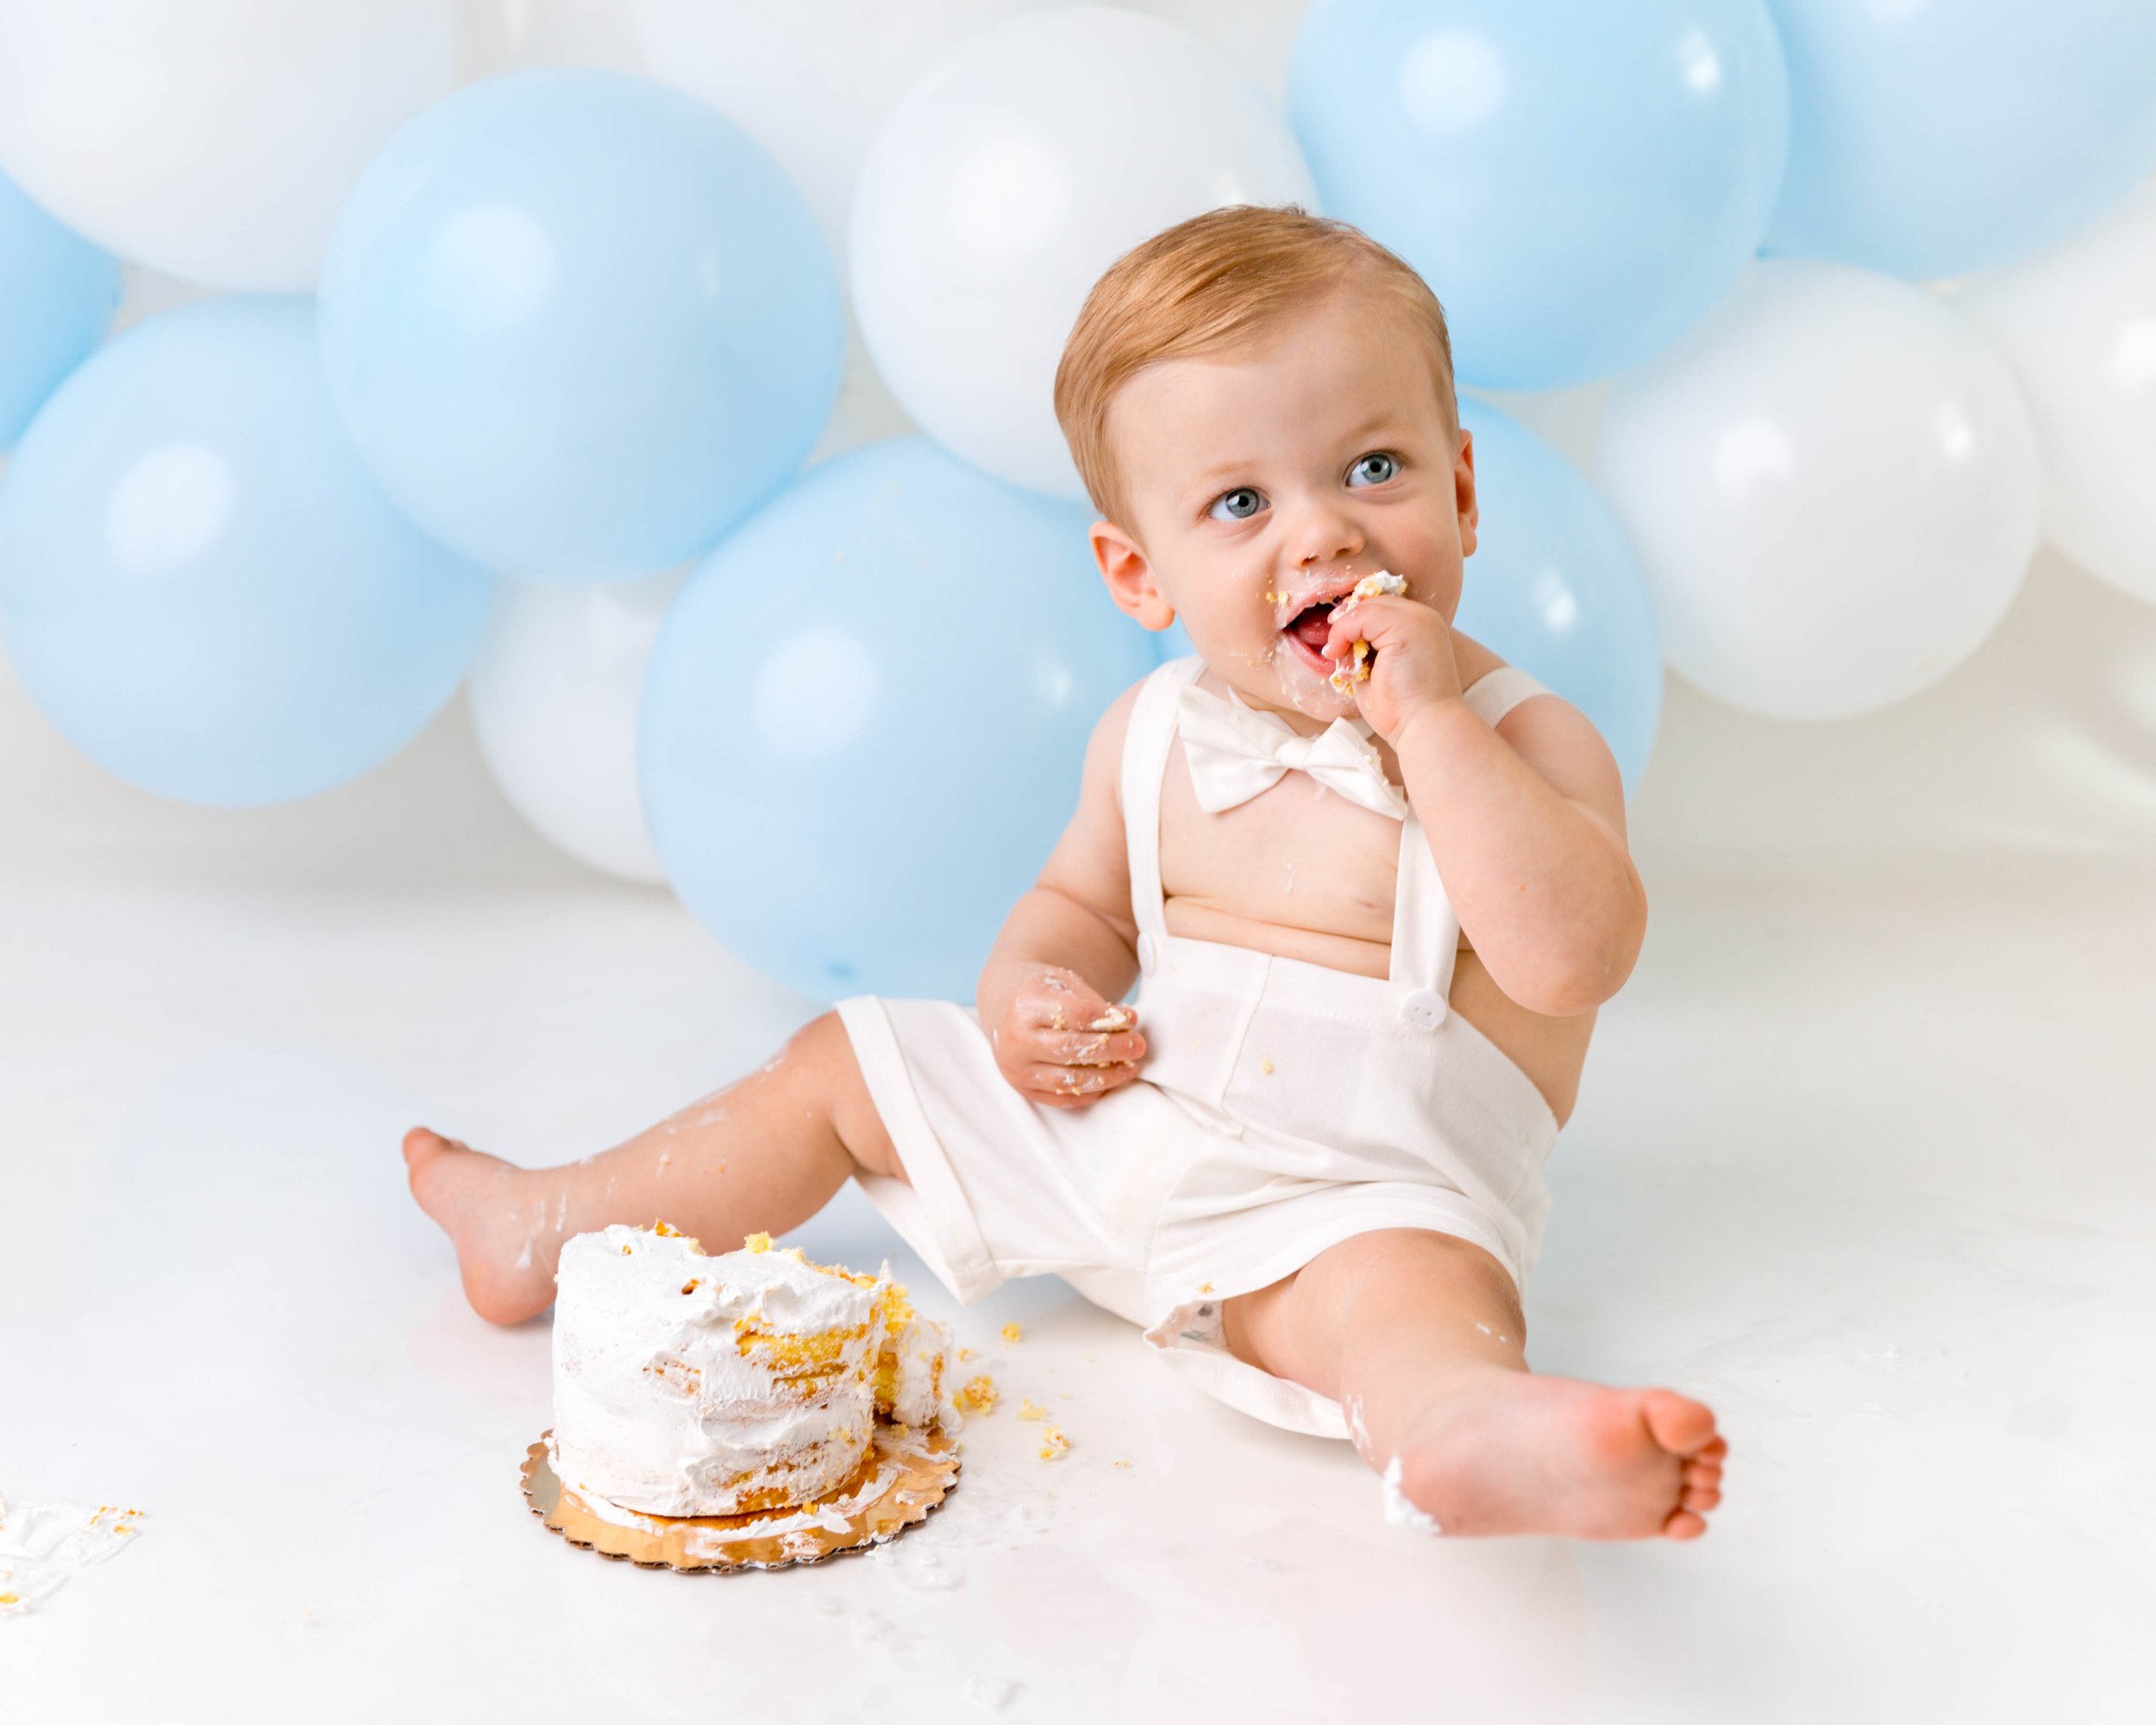 cake-smash-photos-first-birthday-images-milestone-photography-newborn-family-spokane-washington-7.jpg